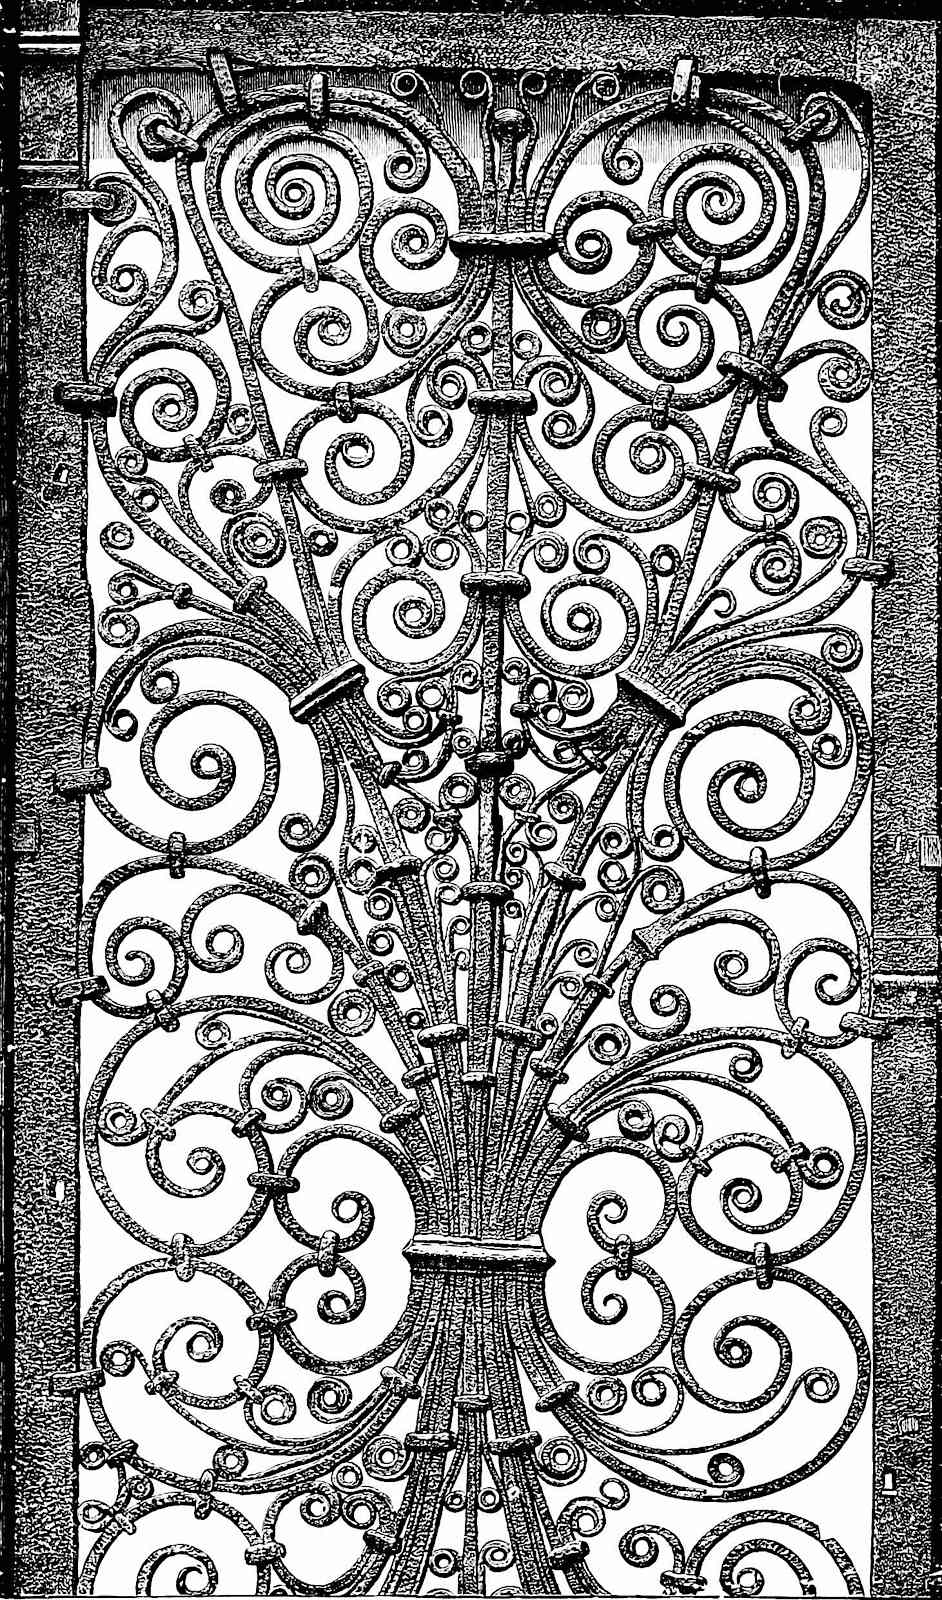 a year 1201 metal gate illustration